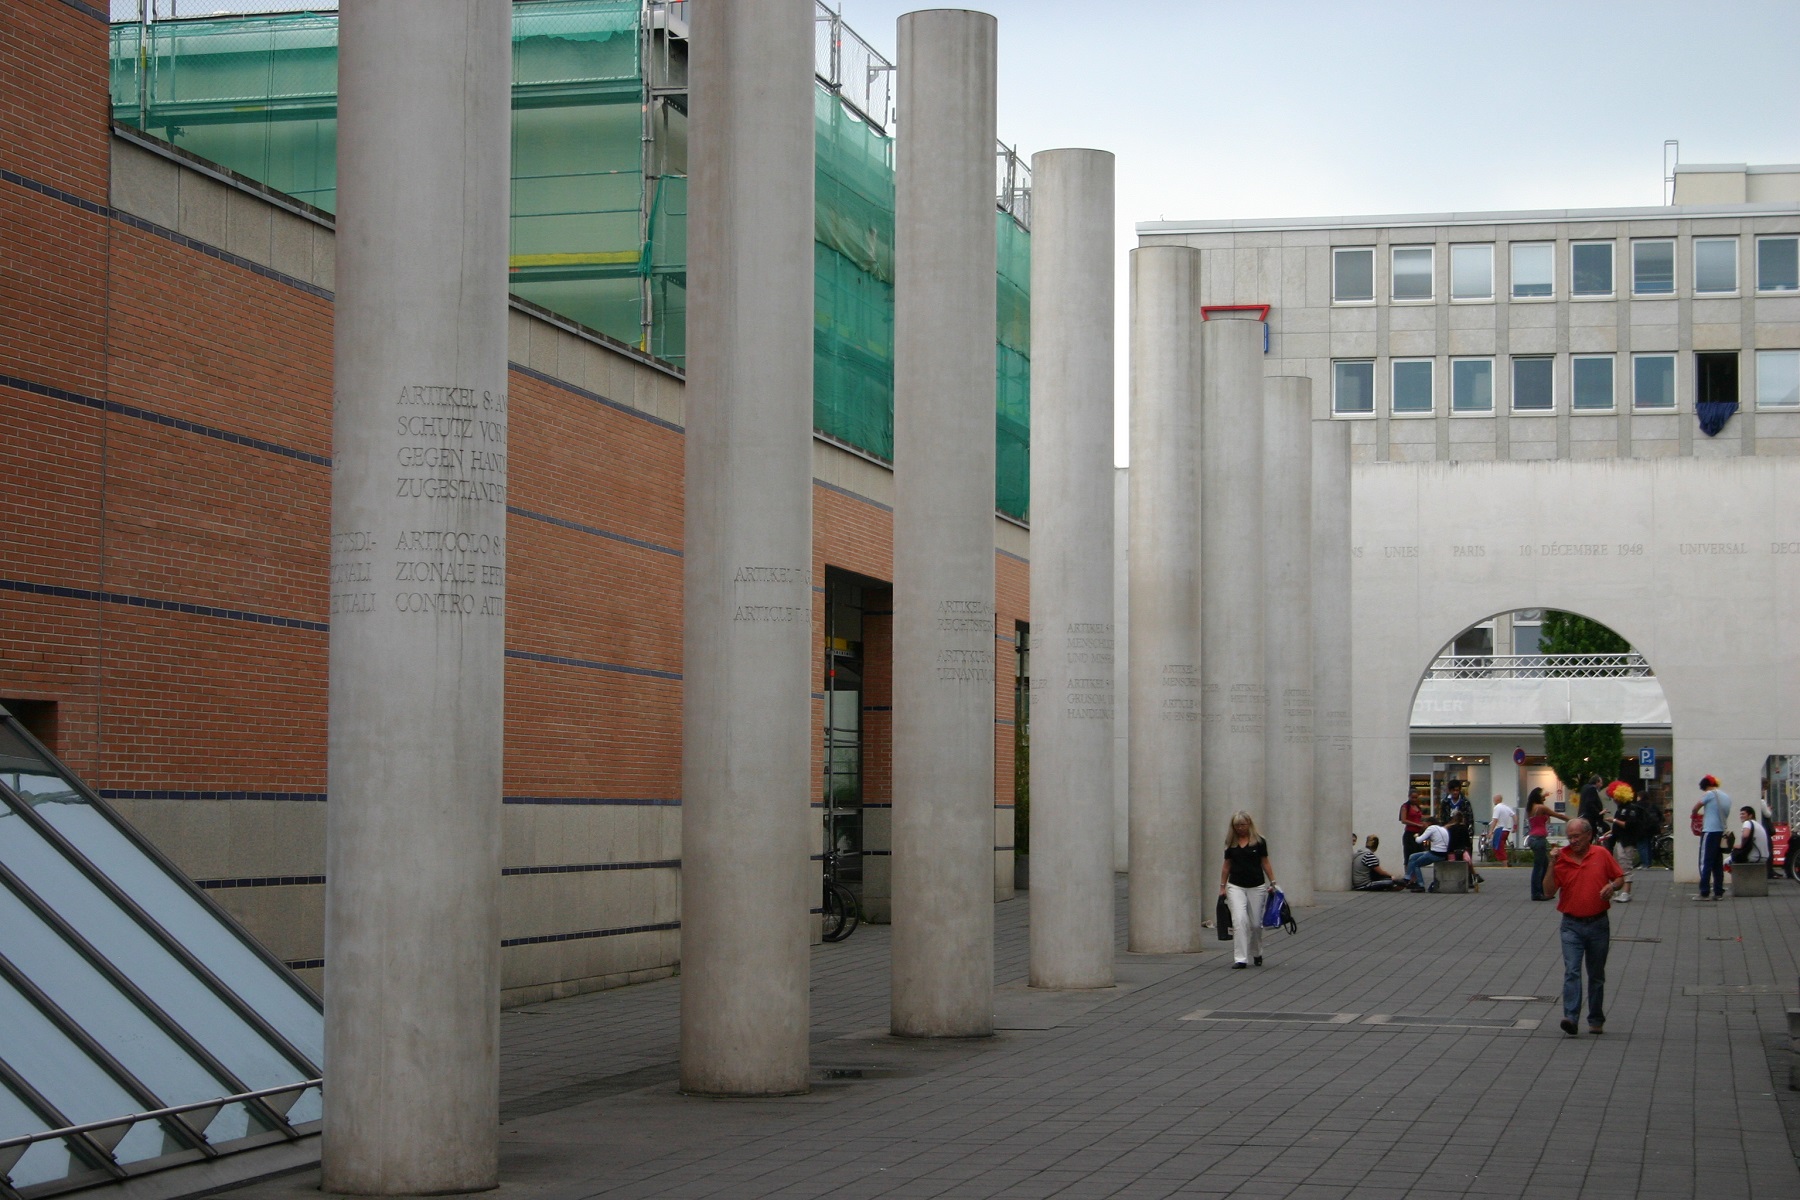 Germanisches Nationalmuseum, Nürnberg